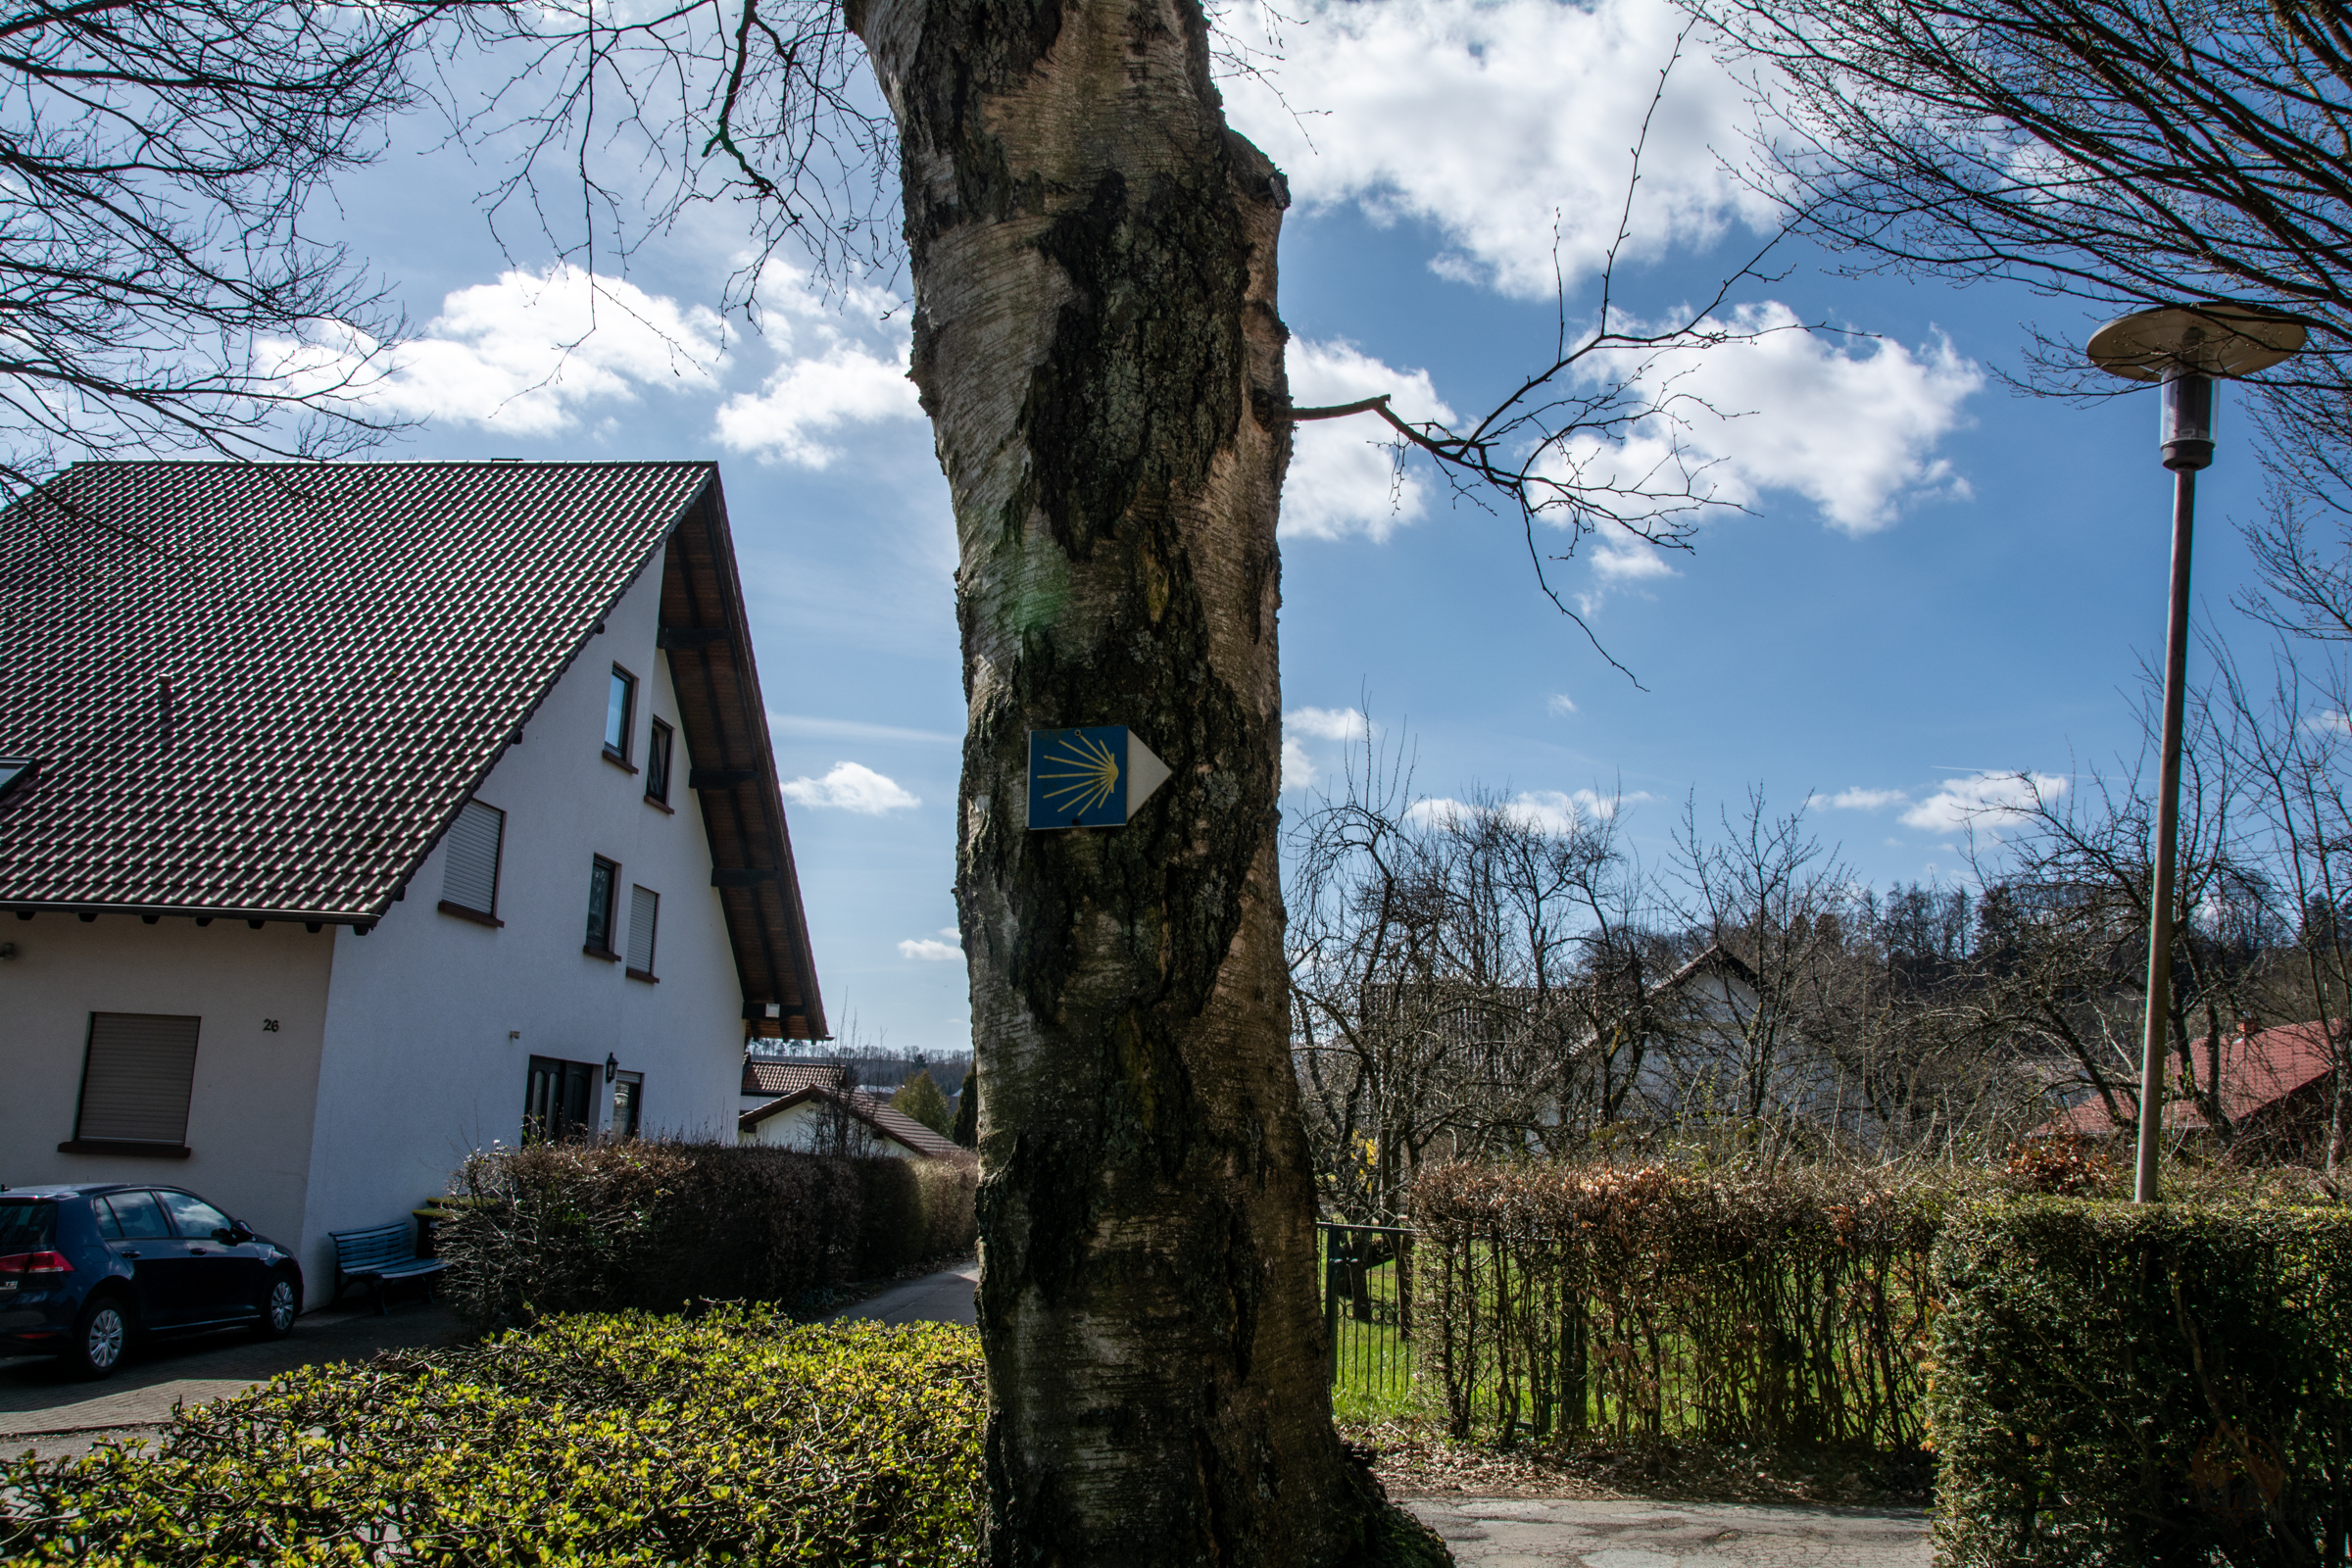 Kloster | Blieskastel | Saar-Pfalz | Saarland